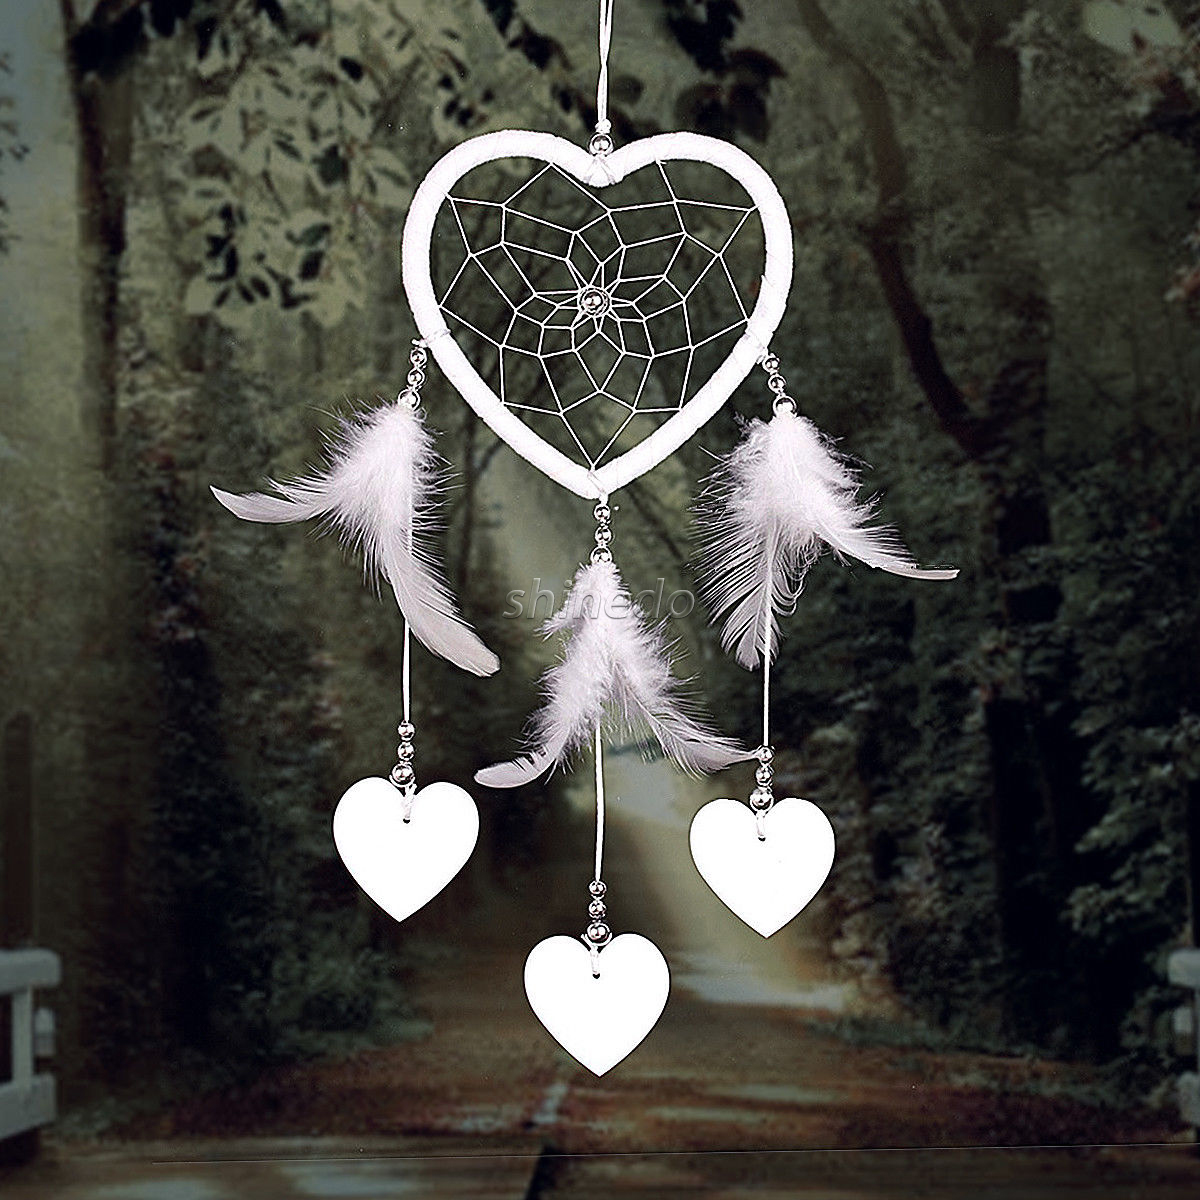 Heart-shaped handmade dream catcher wedding party gift SD-SW186